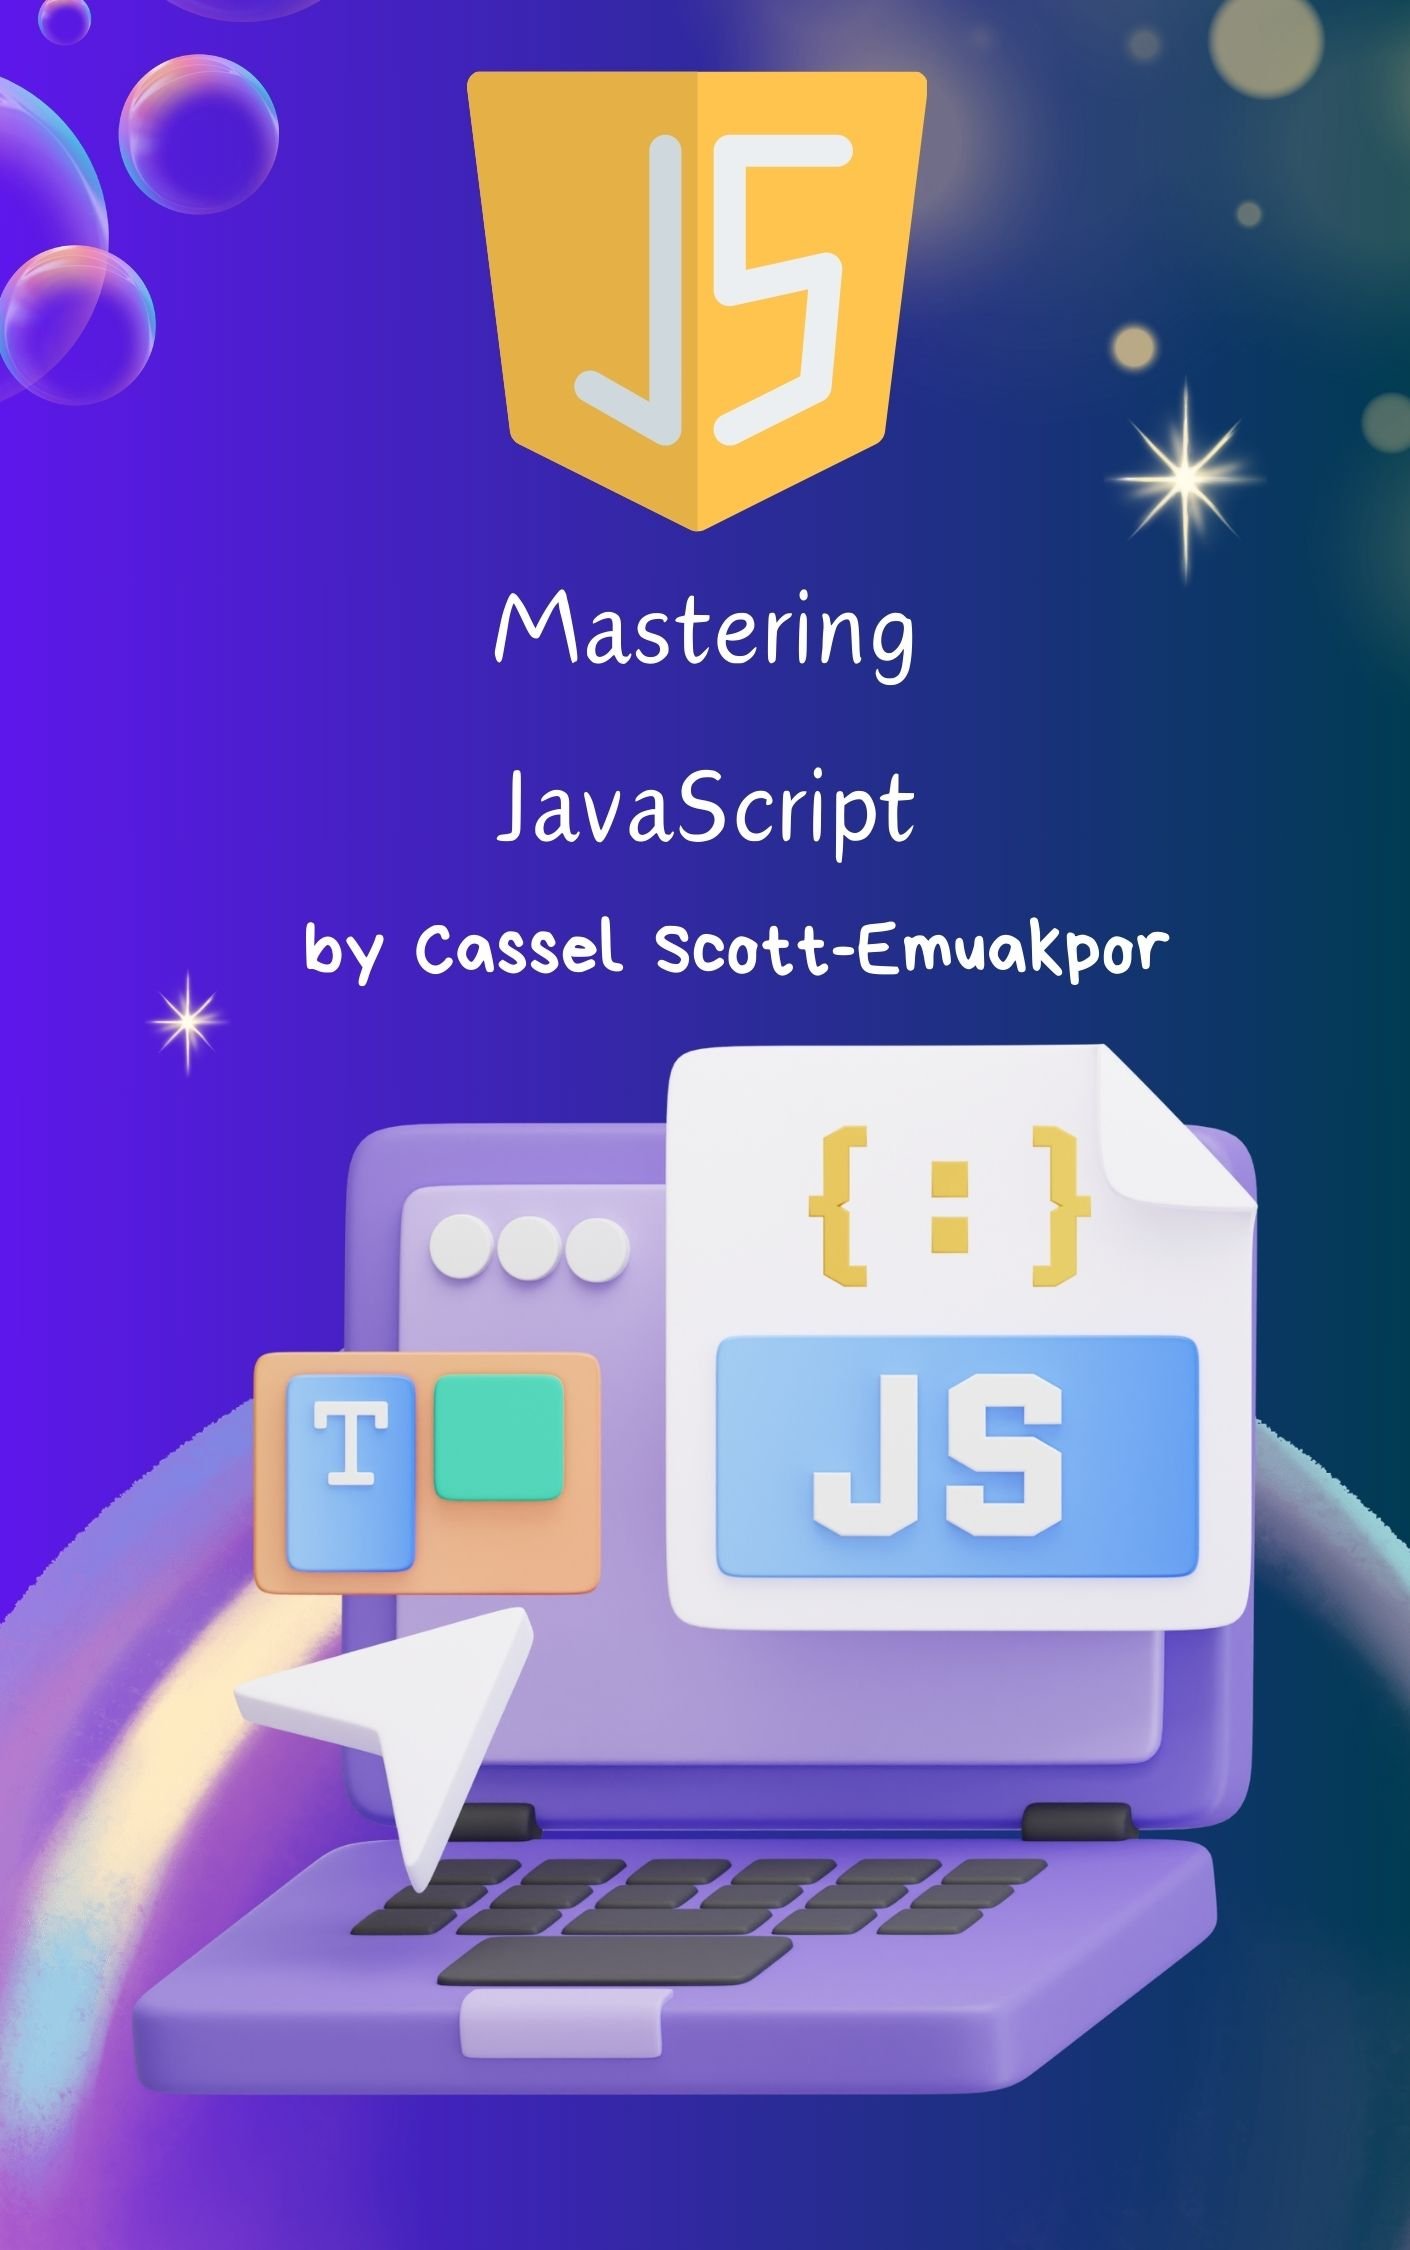 JavaScript Programming